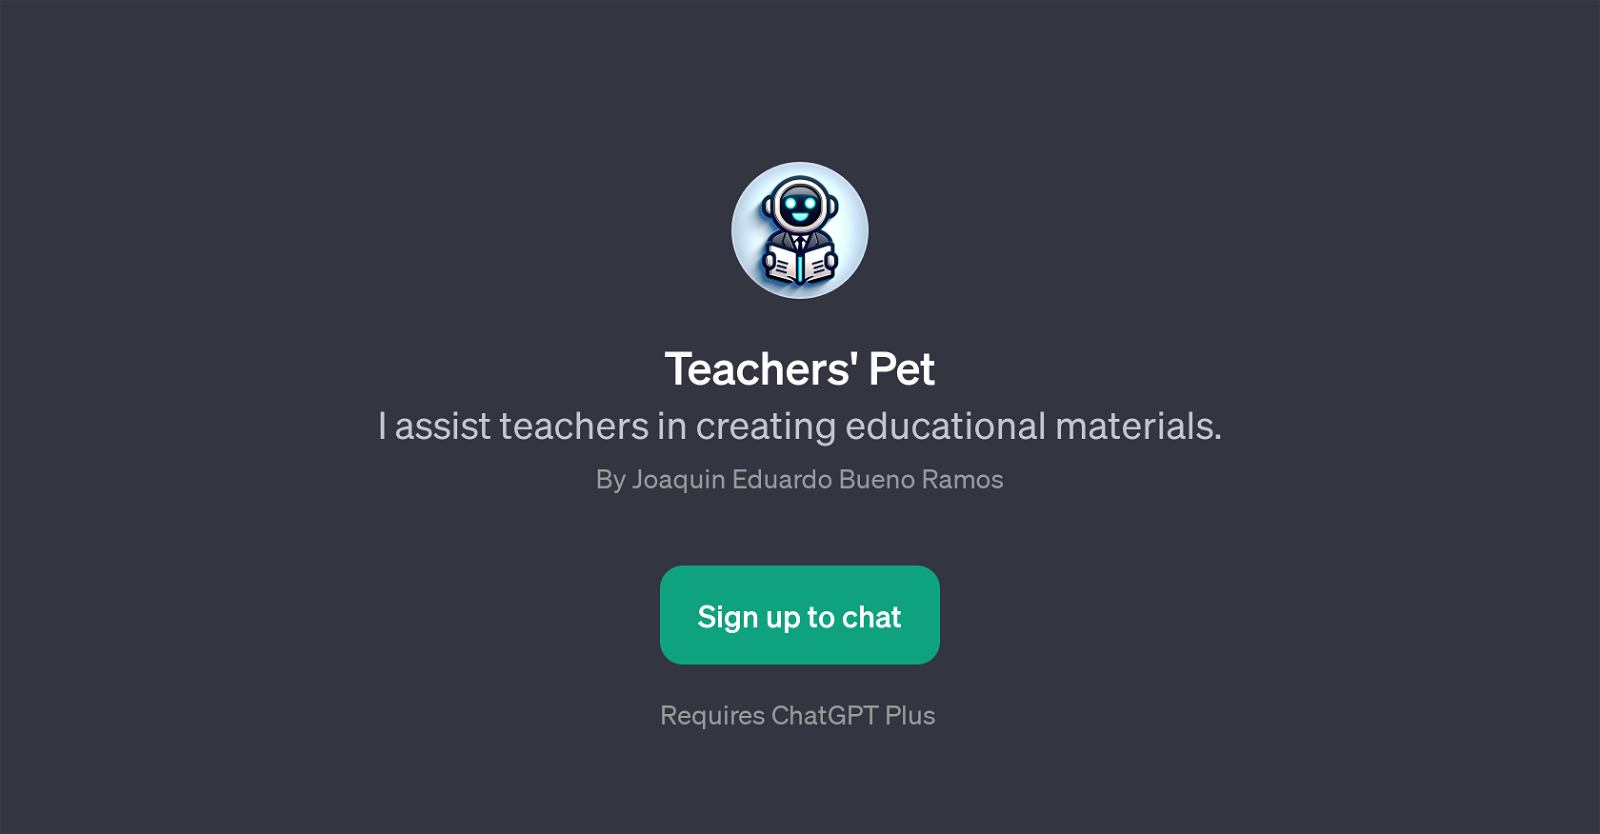 Teachers' Pet website